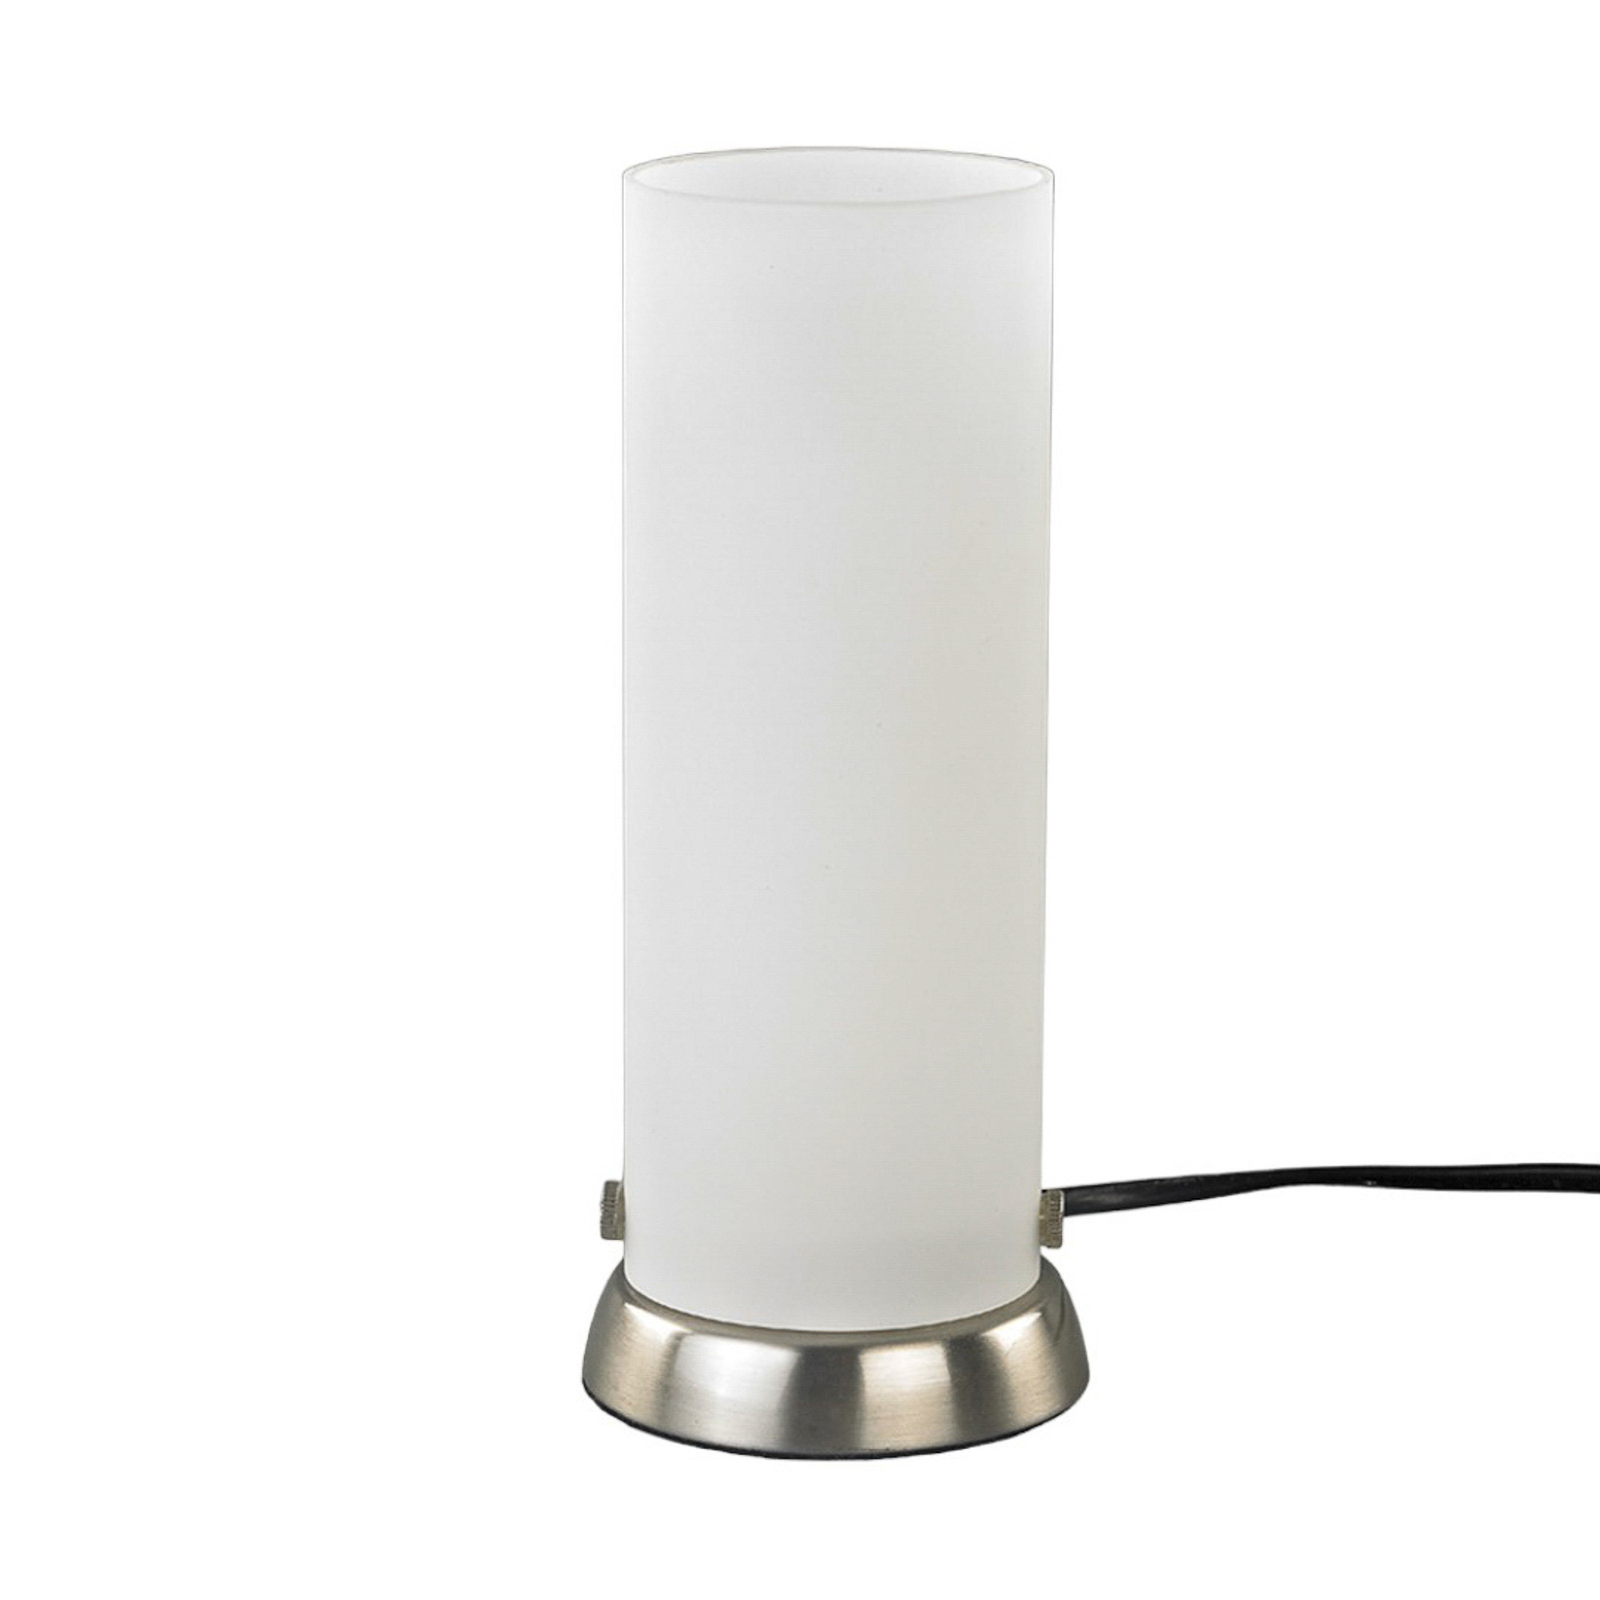 Cylinderformad bordslampa Andrew av glas